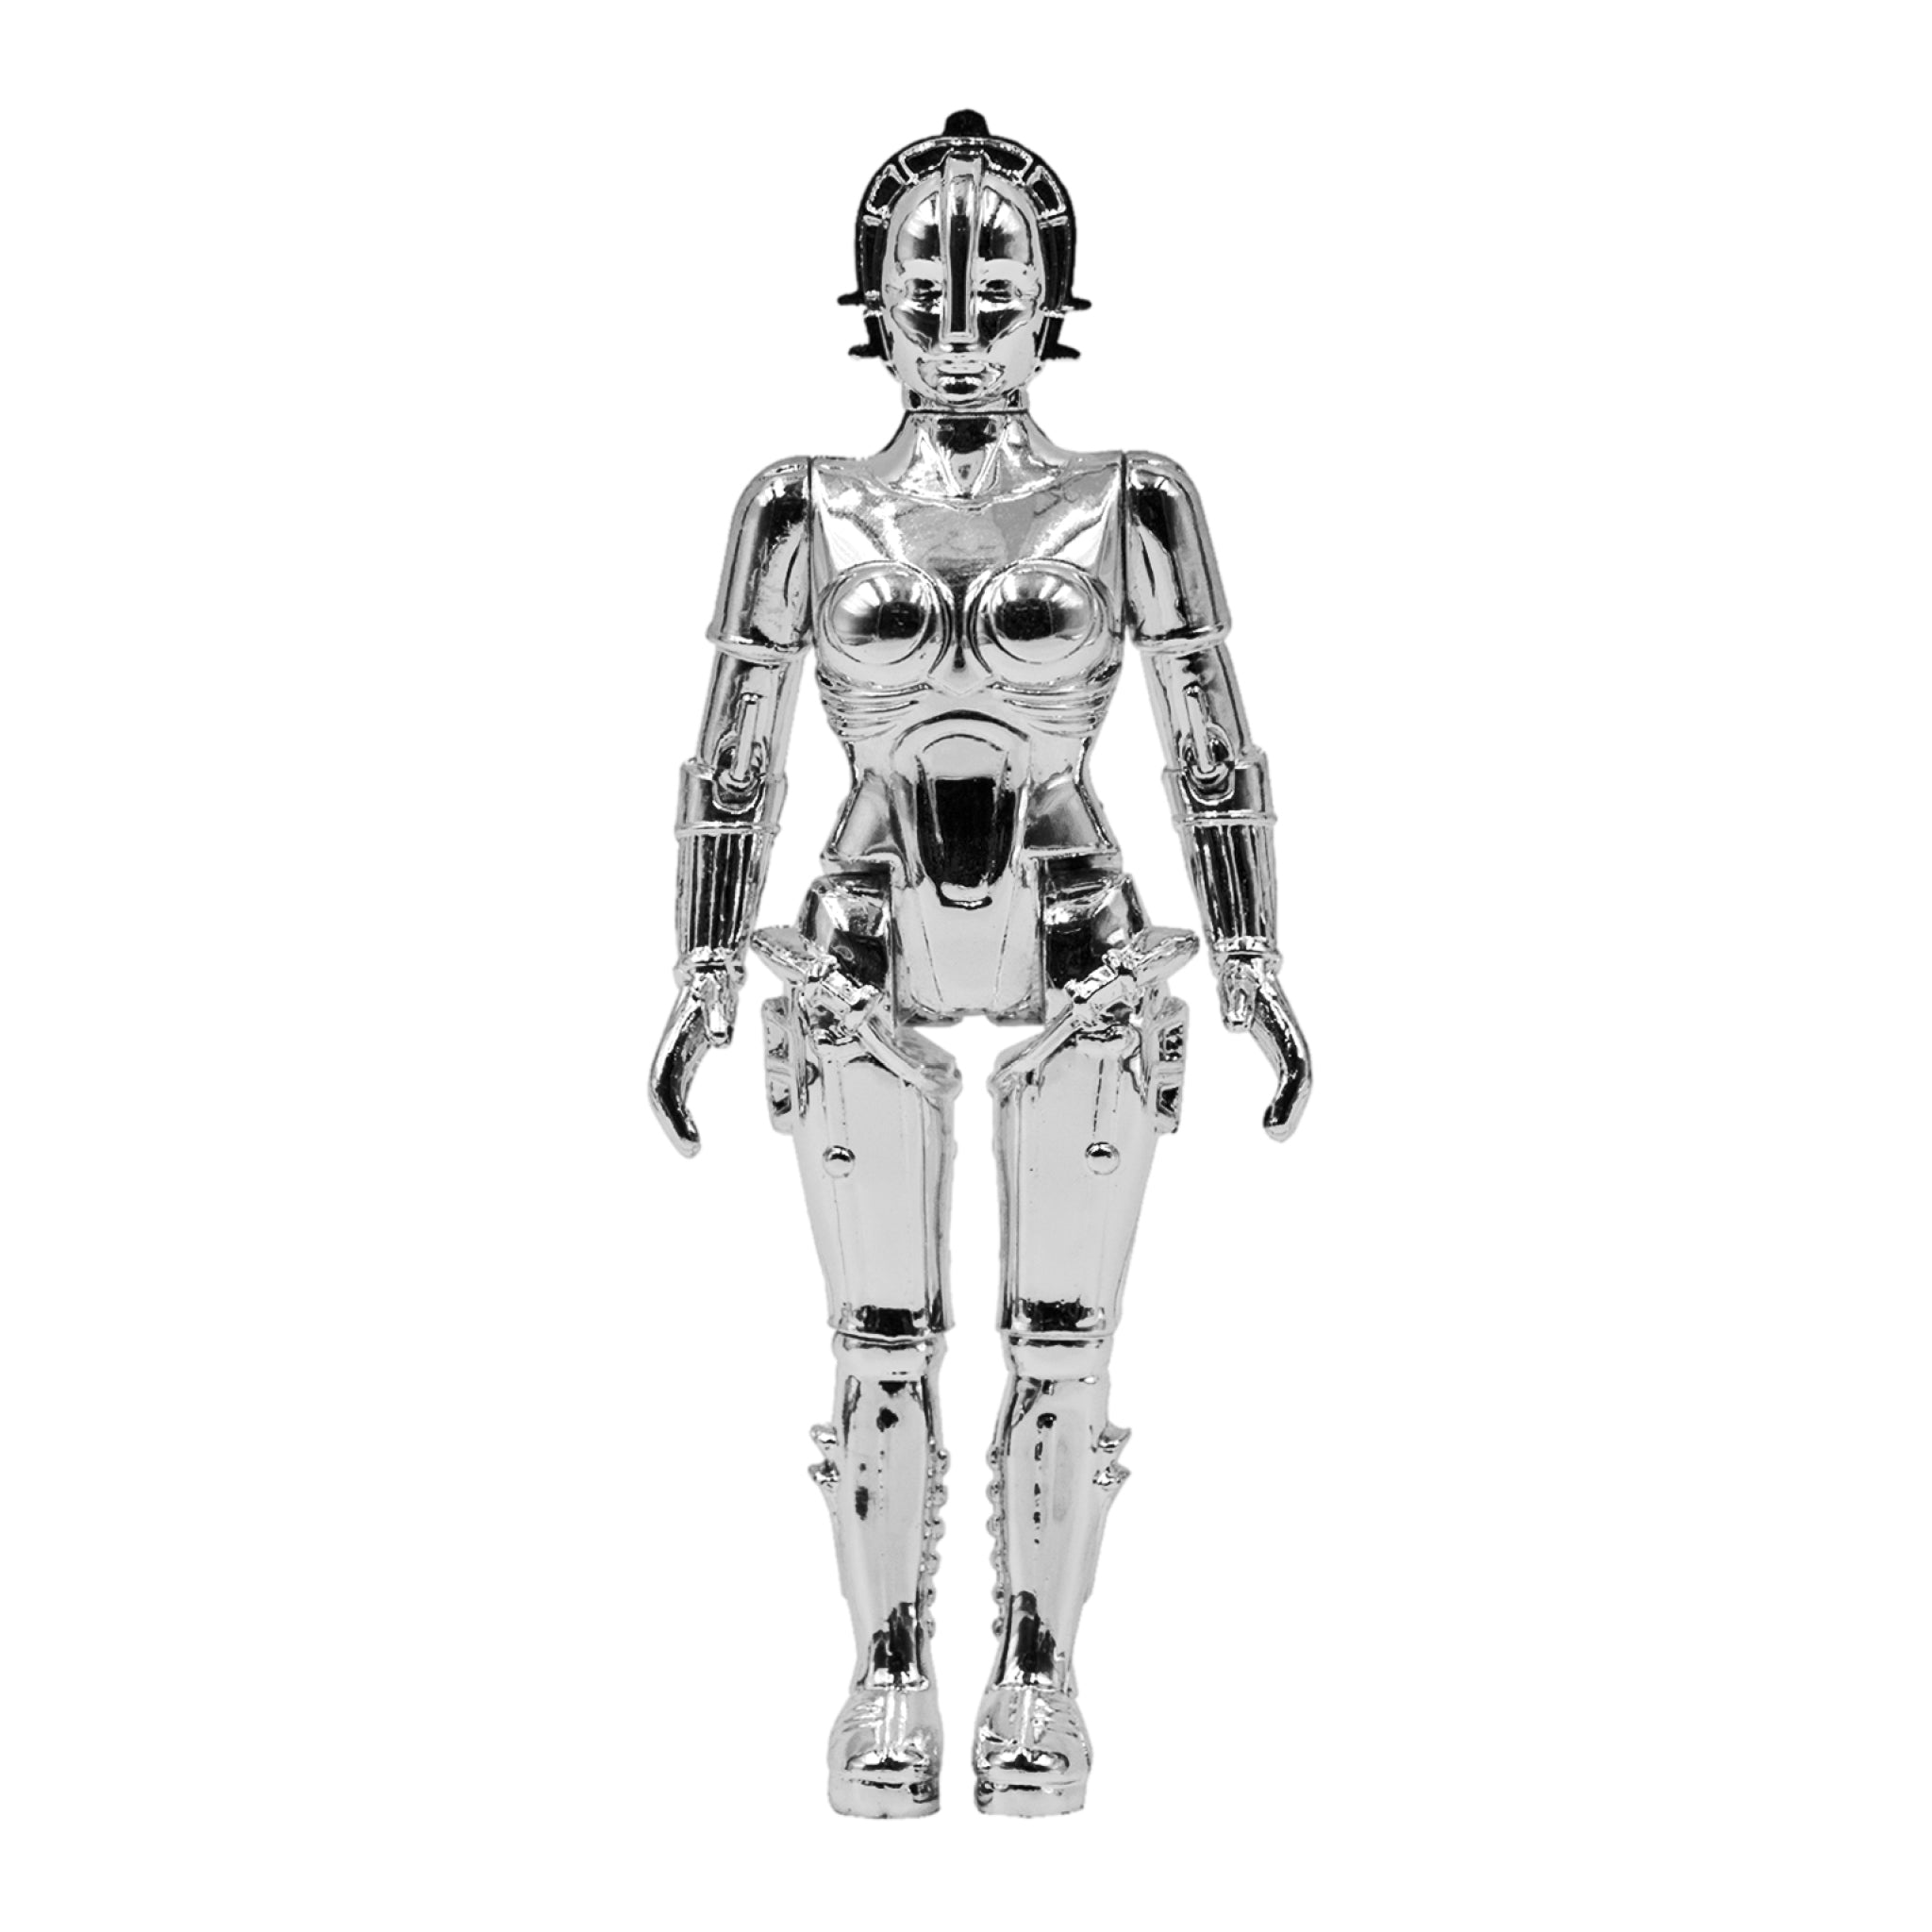 Metropolis ReAction Figure - Maria (Vac Metal Silver)